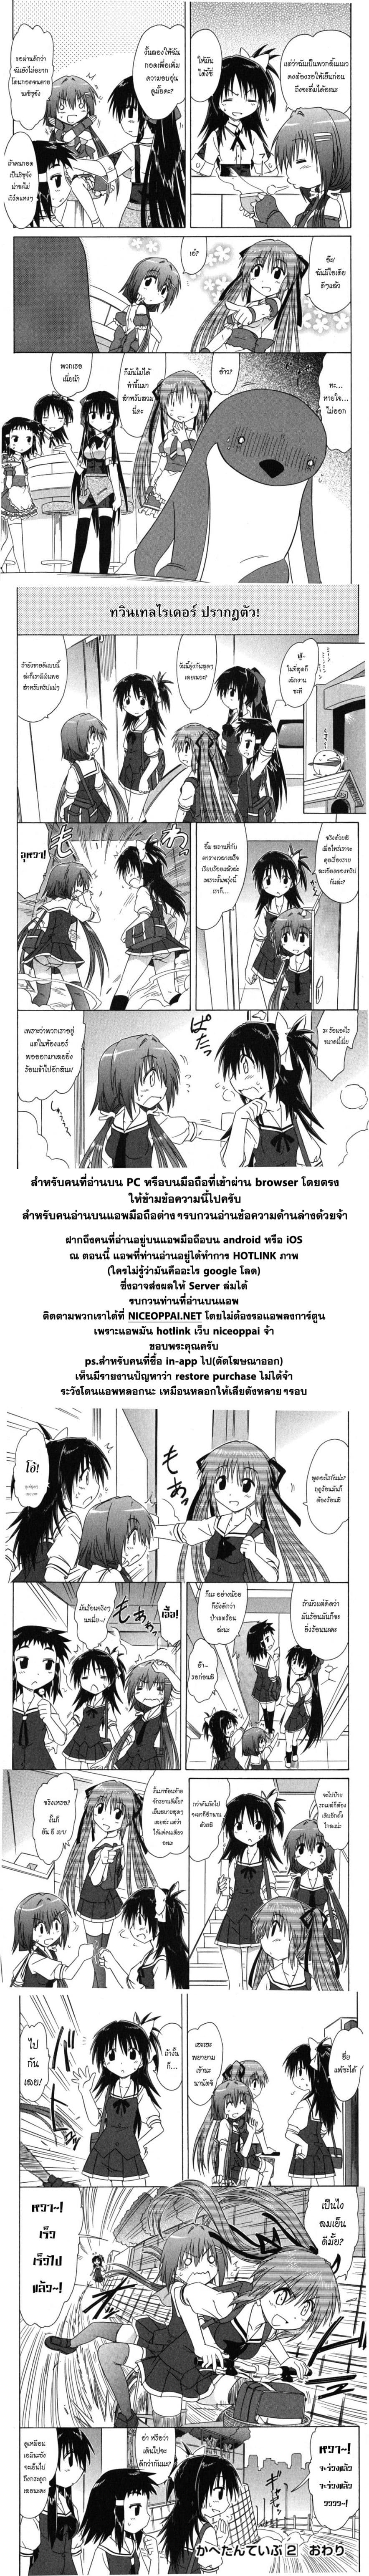 Cafe Detective Club17 (13)